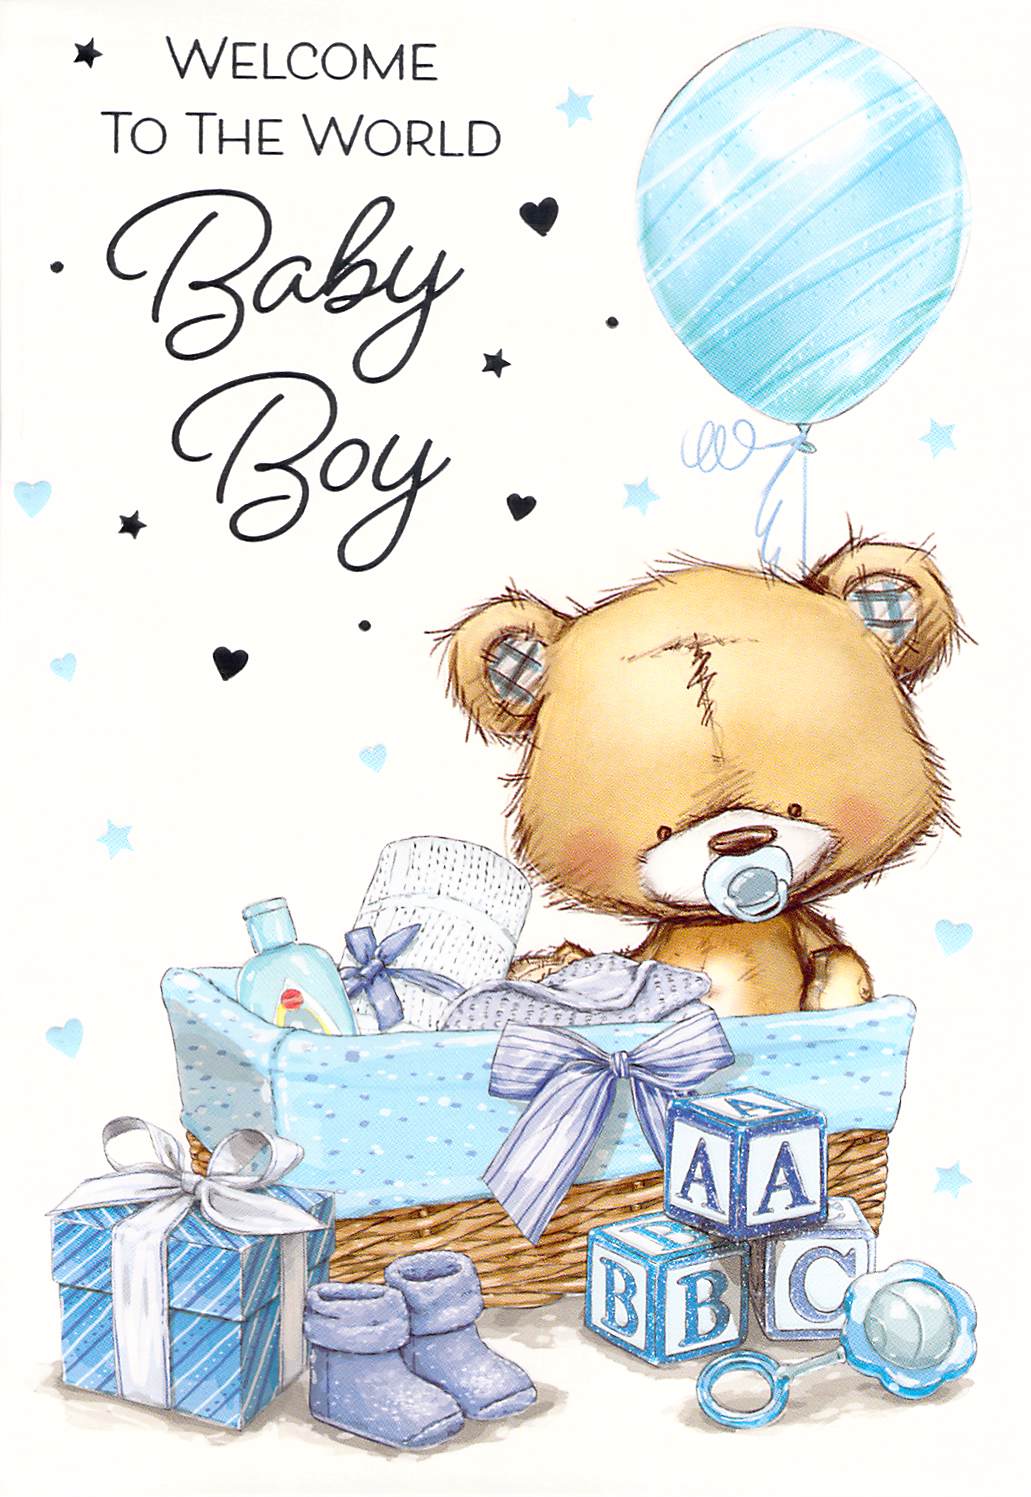 Birth (Boy) - Greeting Card - Multi Buy Discount - Free P&P